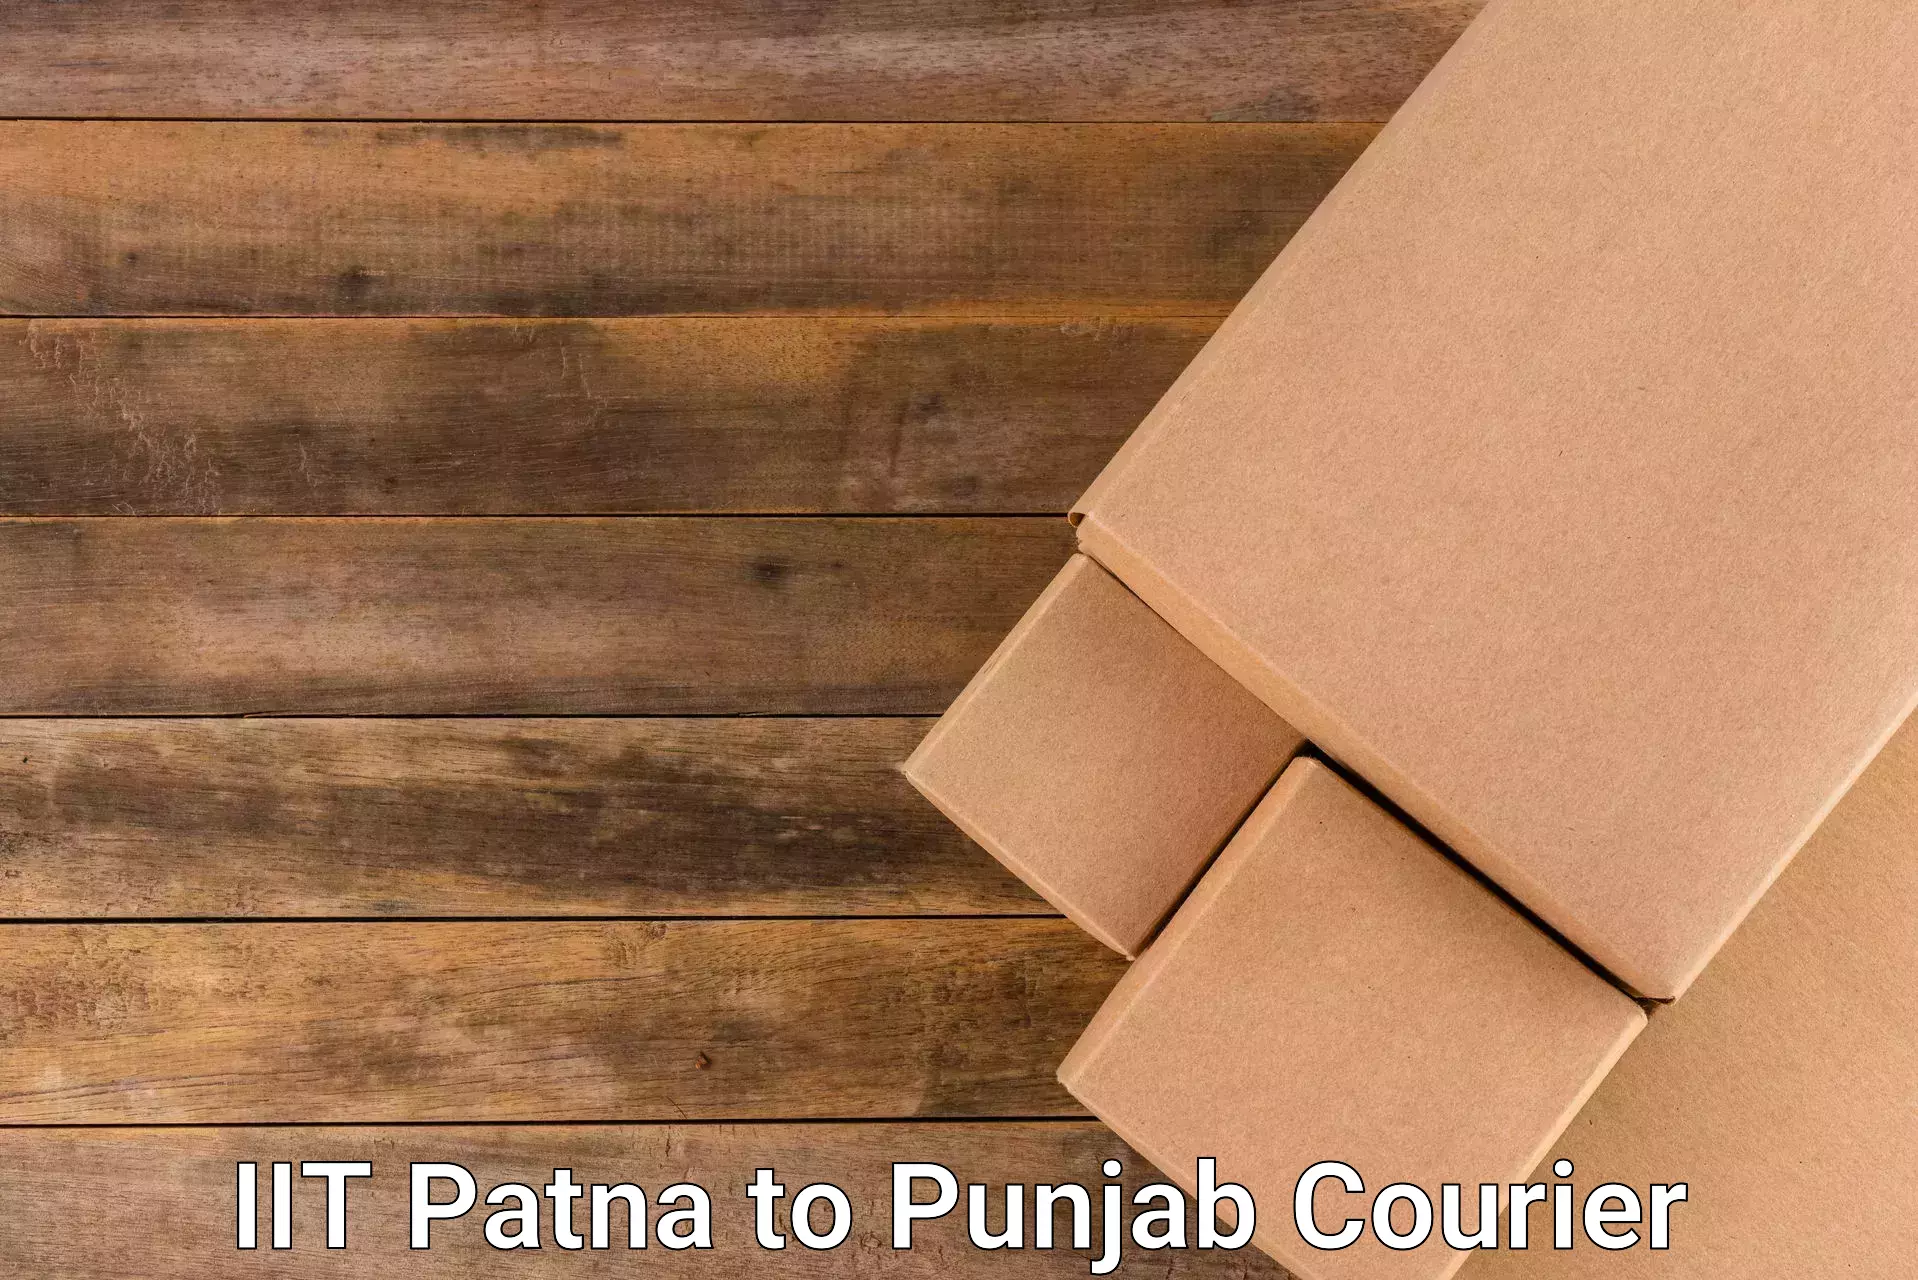 Cost-effective courier options IIT Patna to Dera Bassi